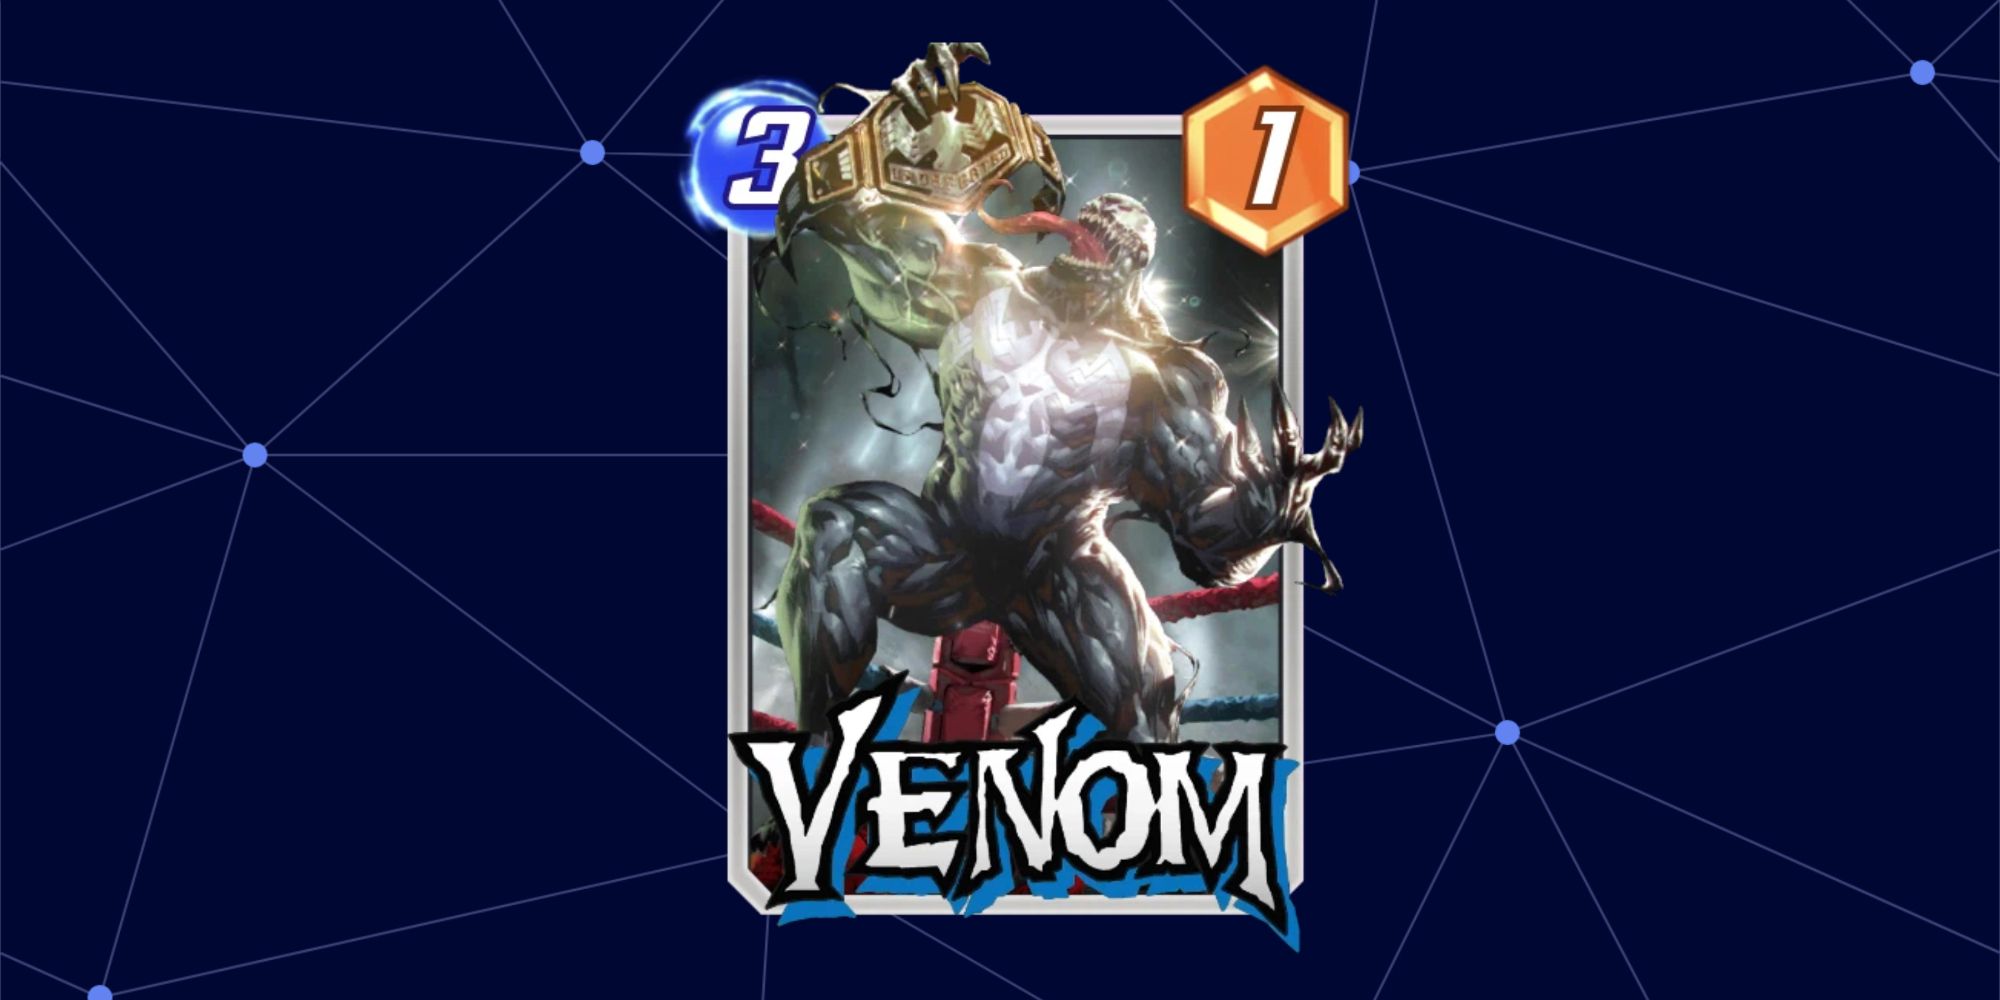 venom wrestling variant card